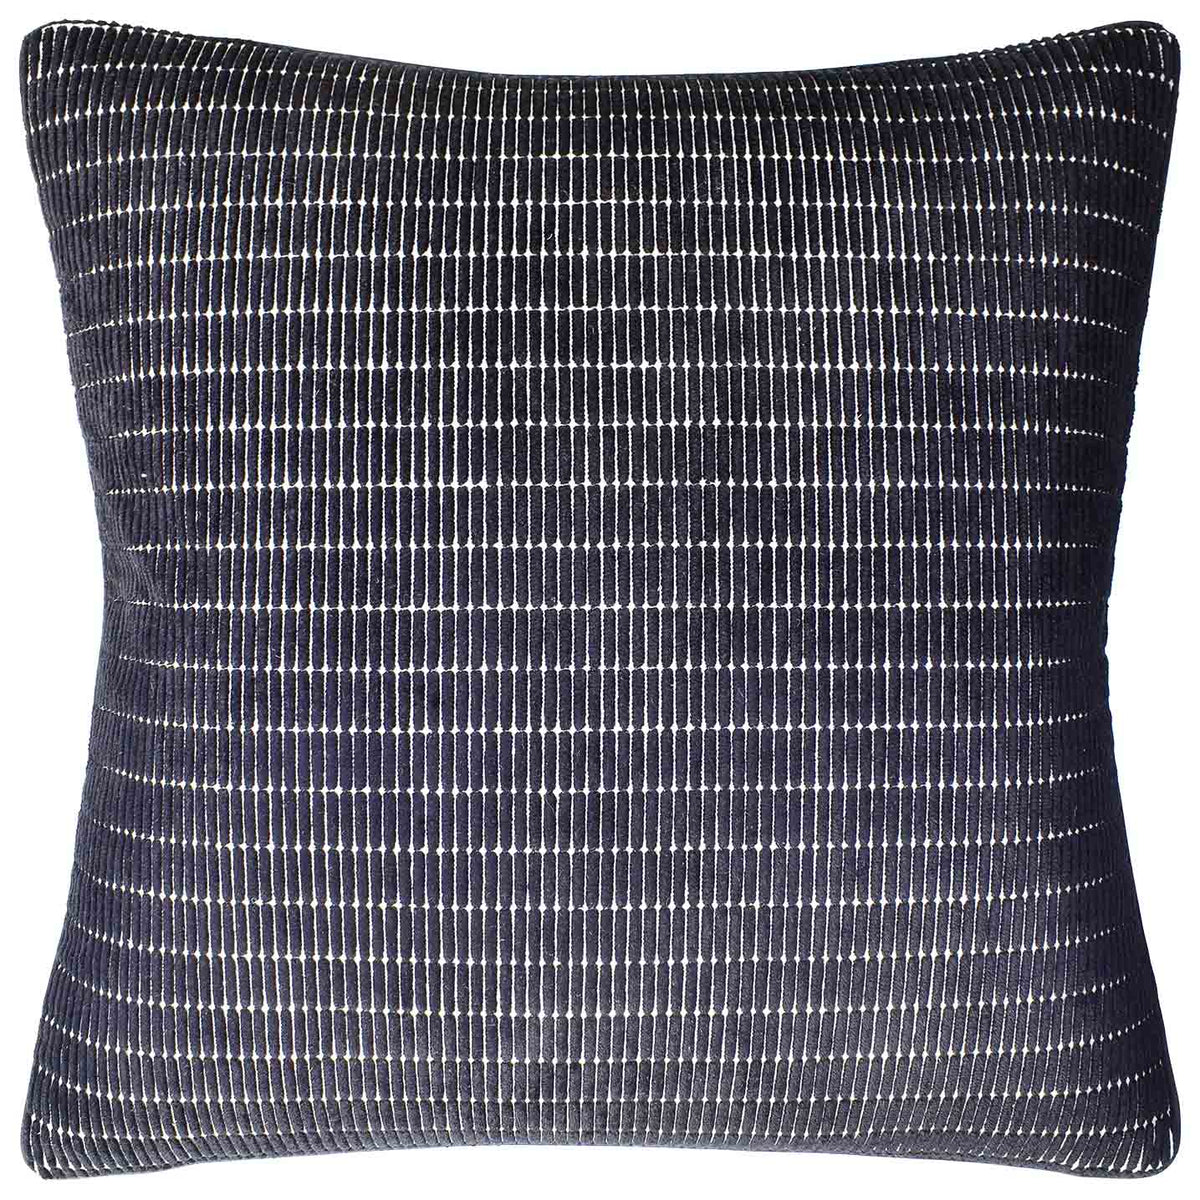 Tally Stripe Noir - Throw Pillow by Ryan Studio